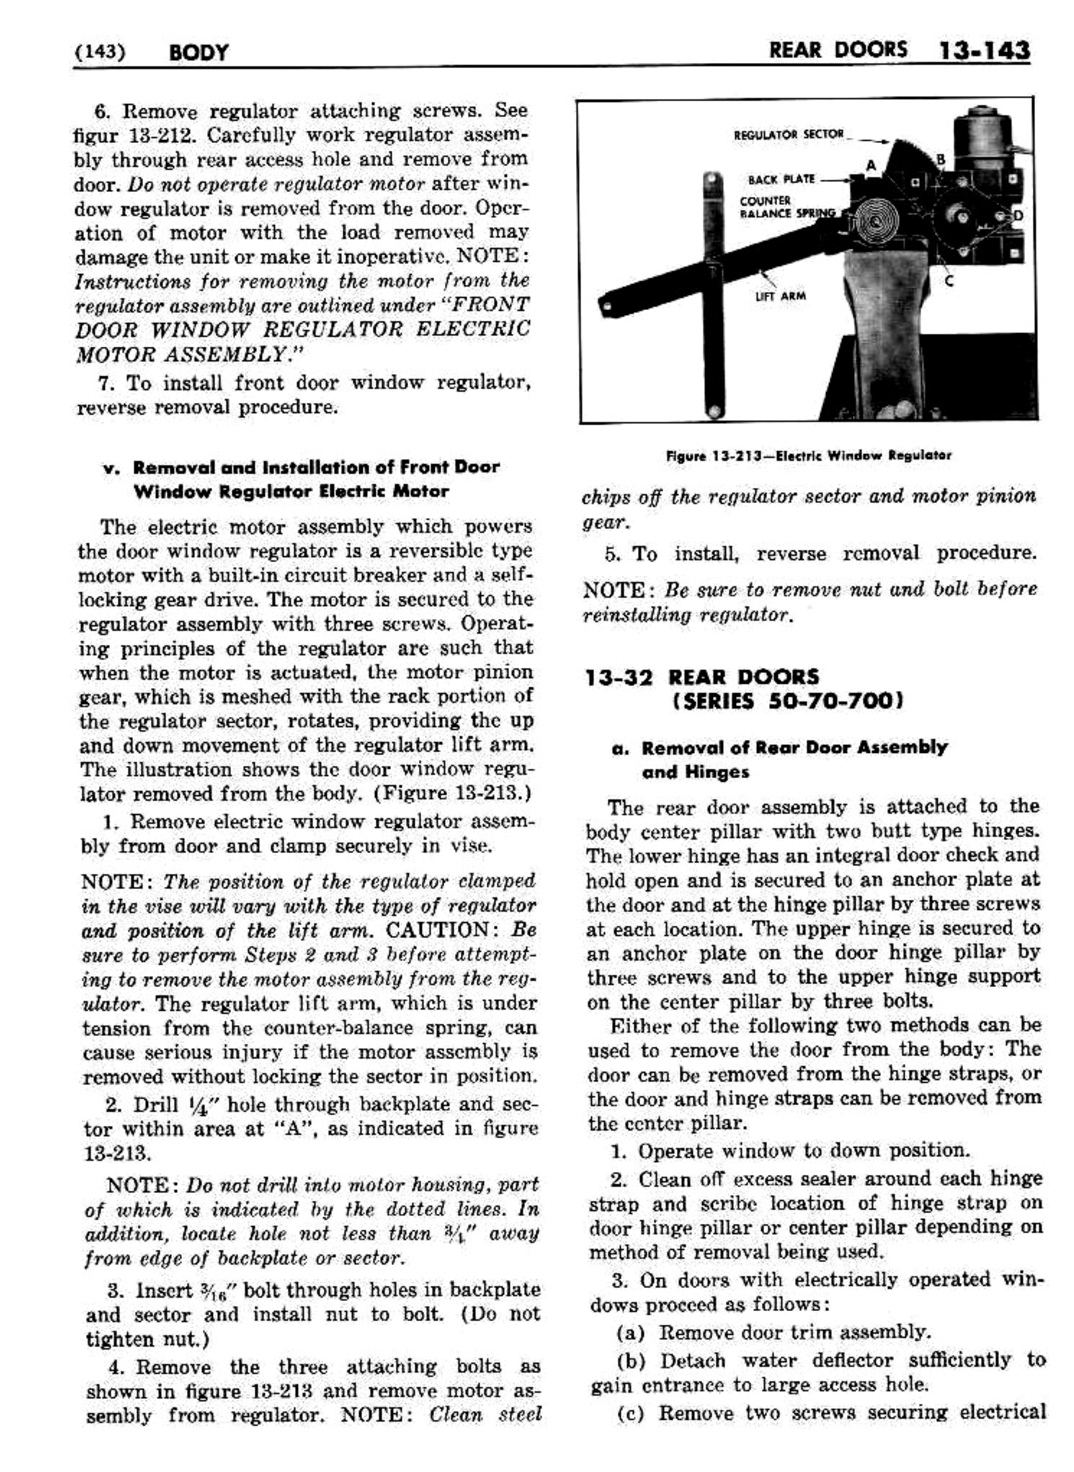 n_1958 Buick Body Service Manual-144-144.jpg